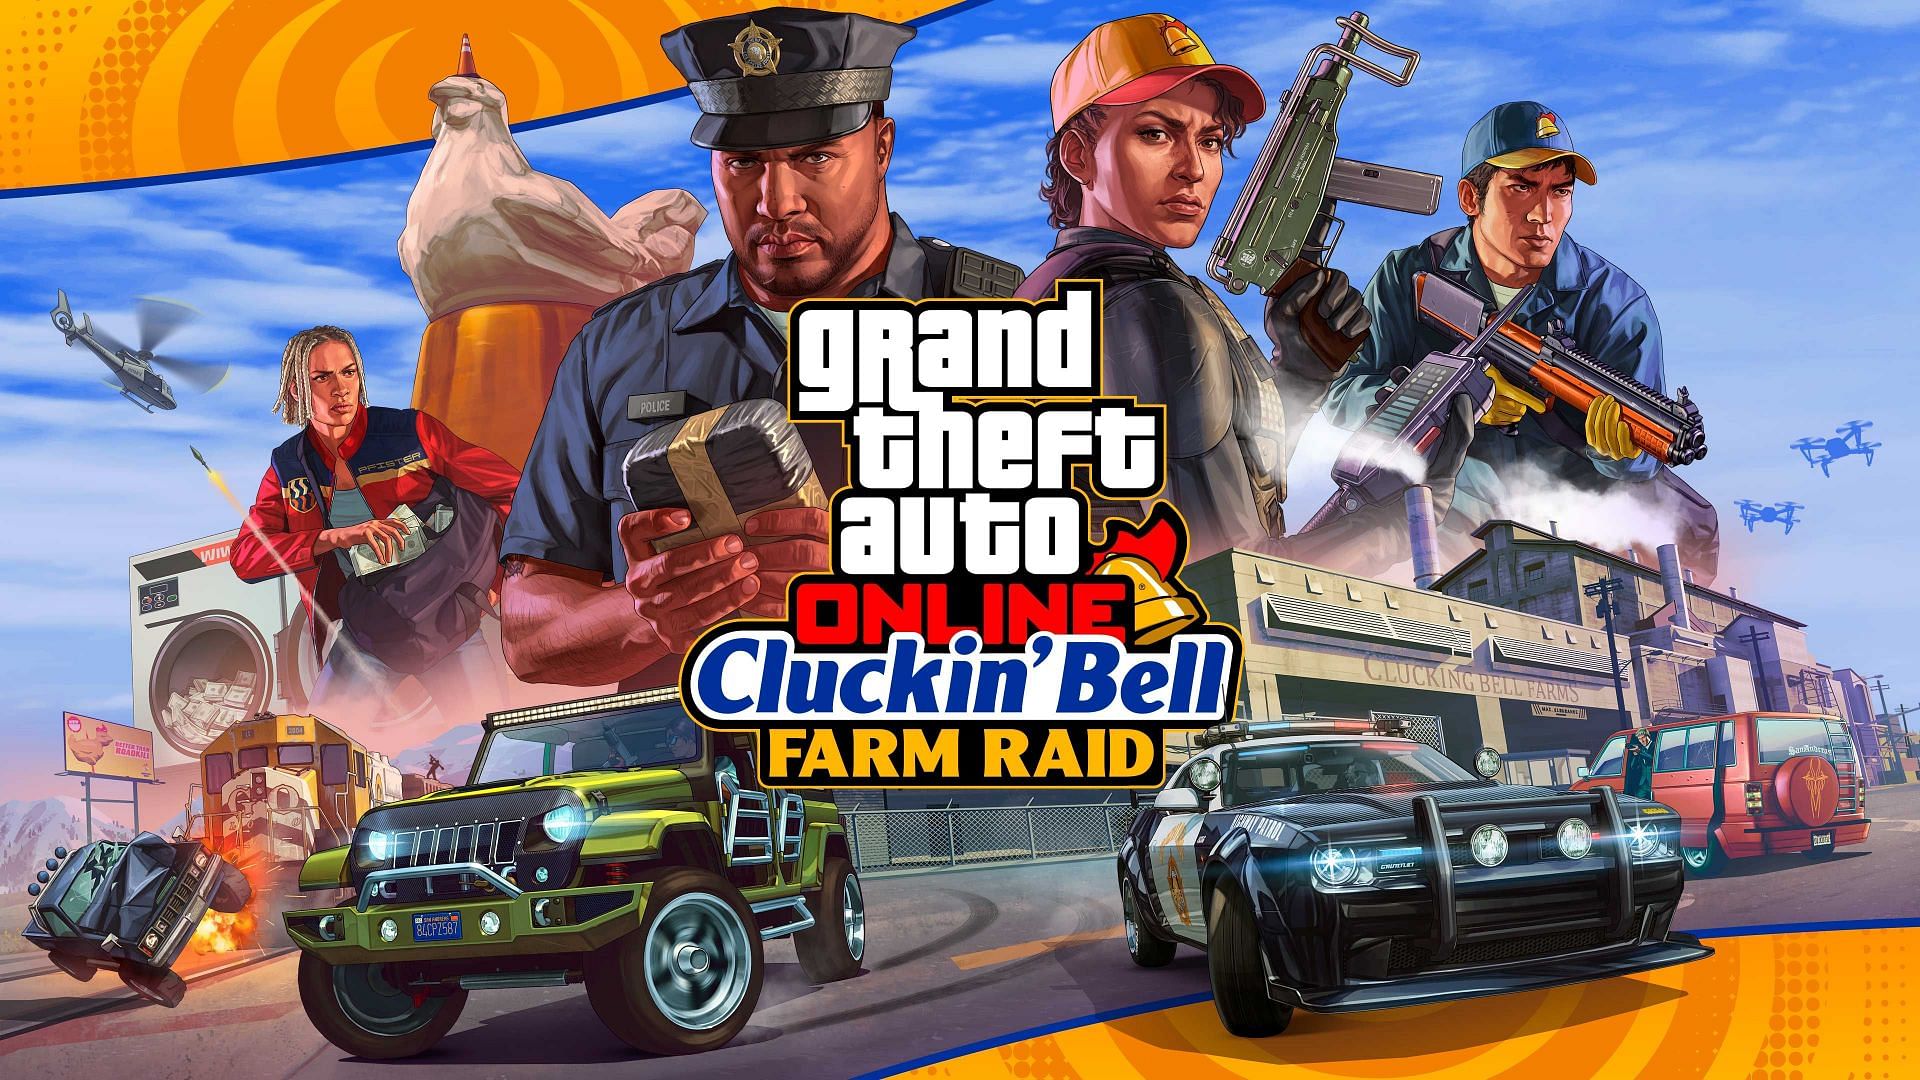 Official Cluckin Bell Farm Raid poster (Image via Rockstar Games)